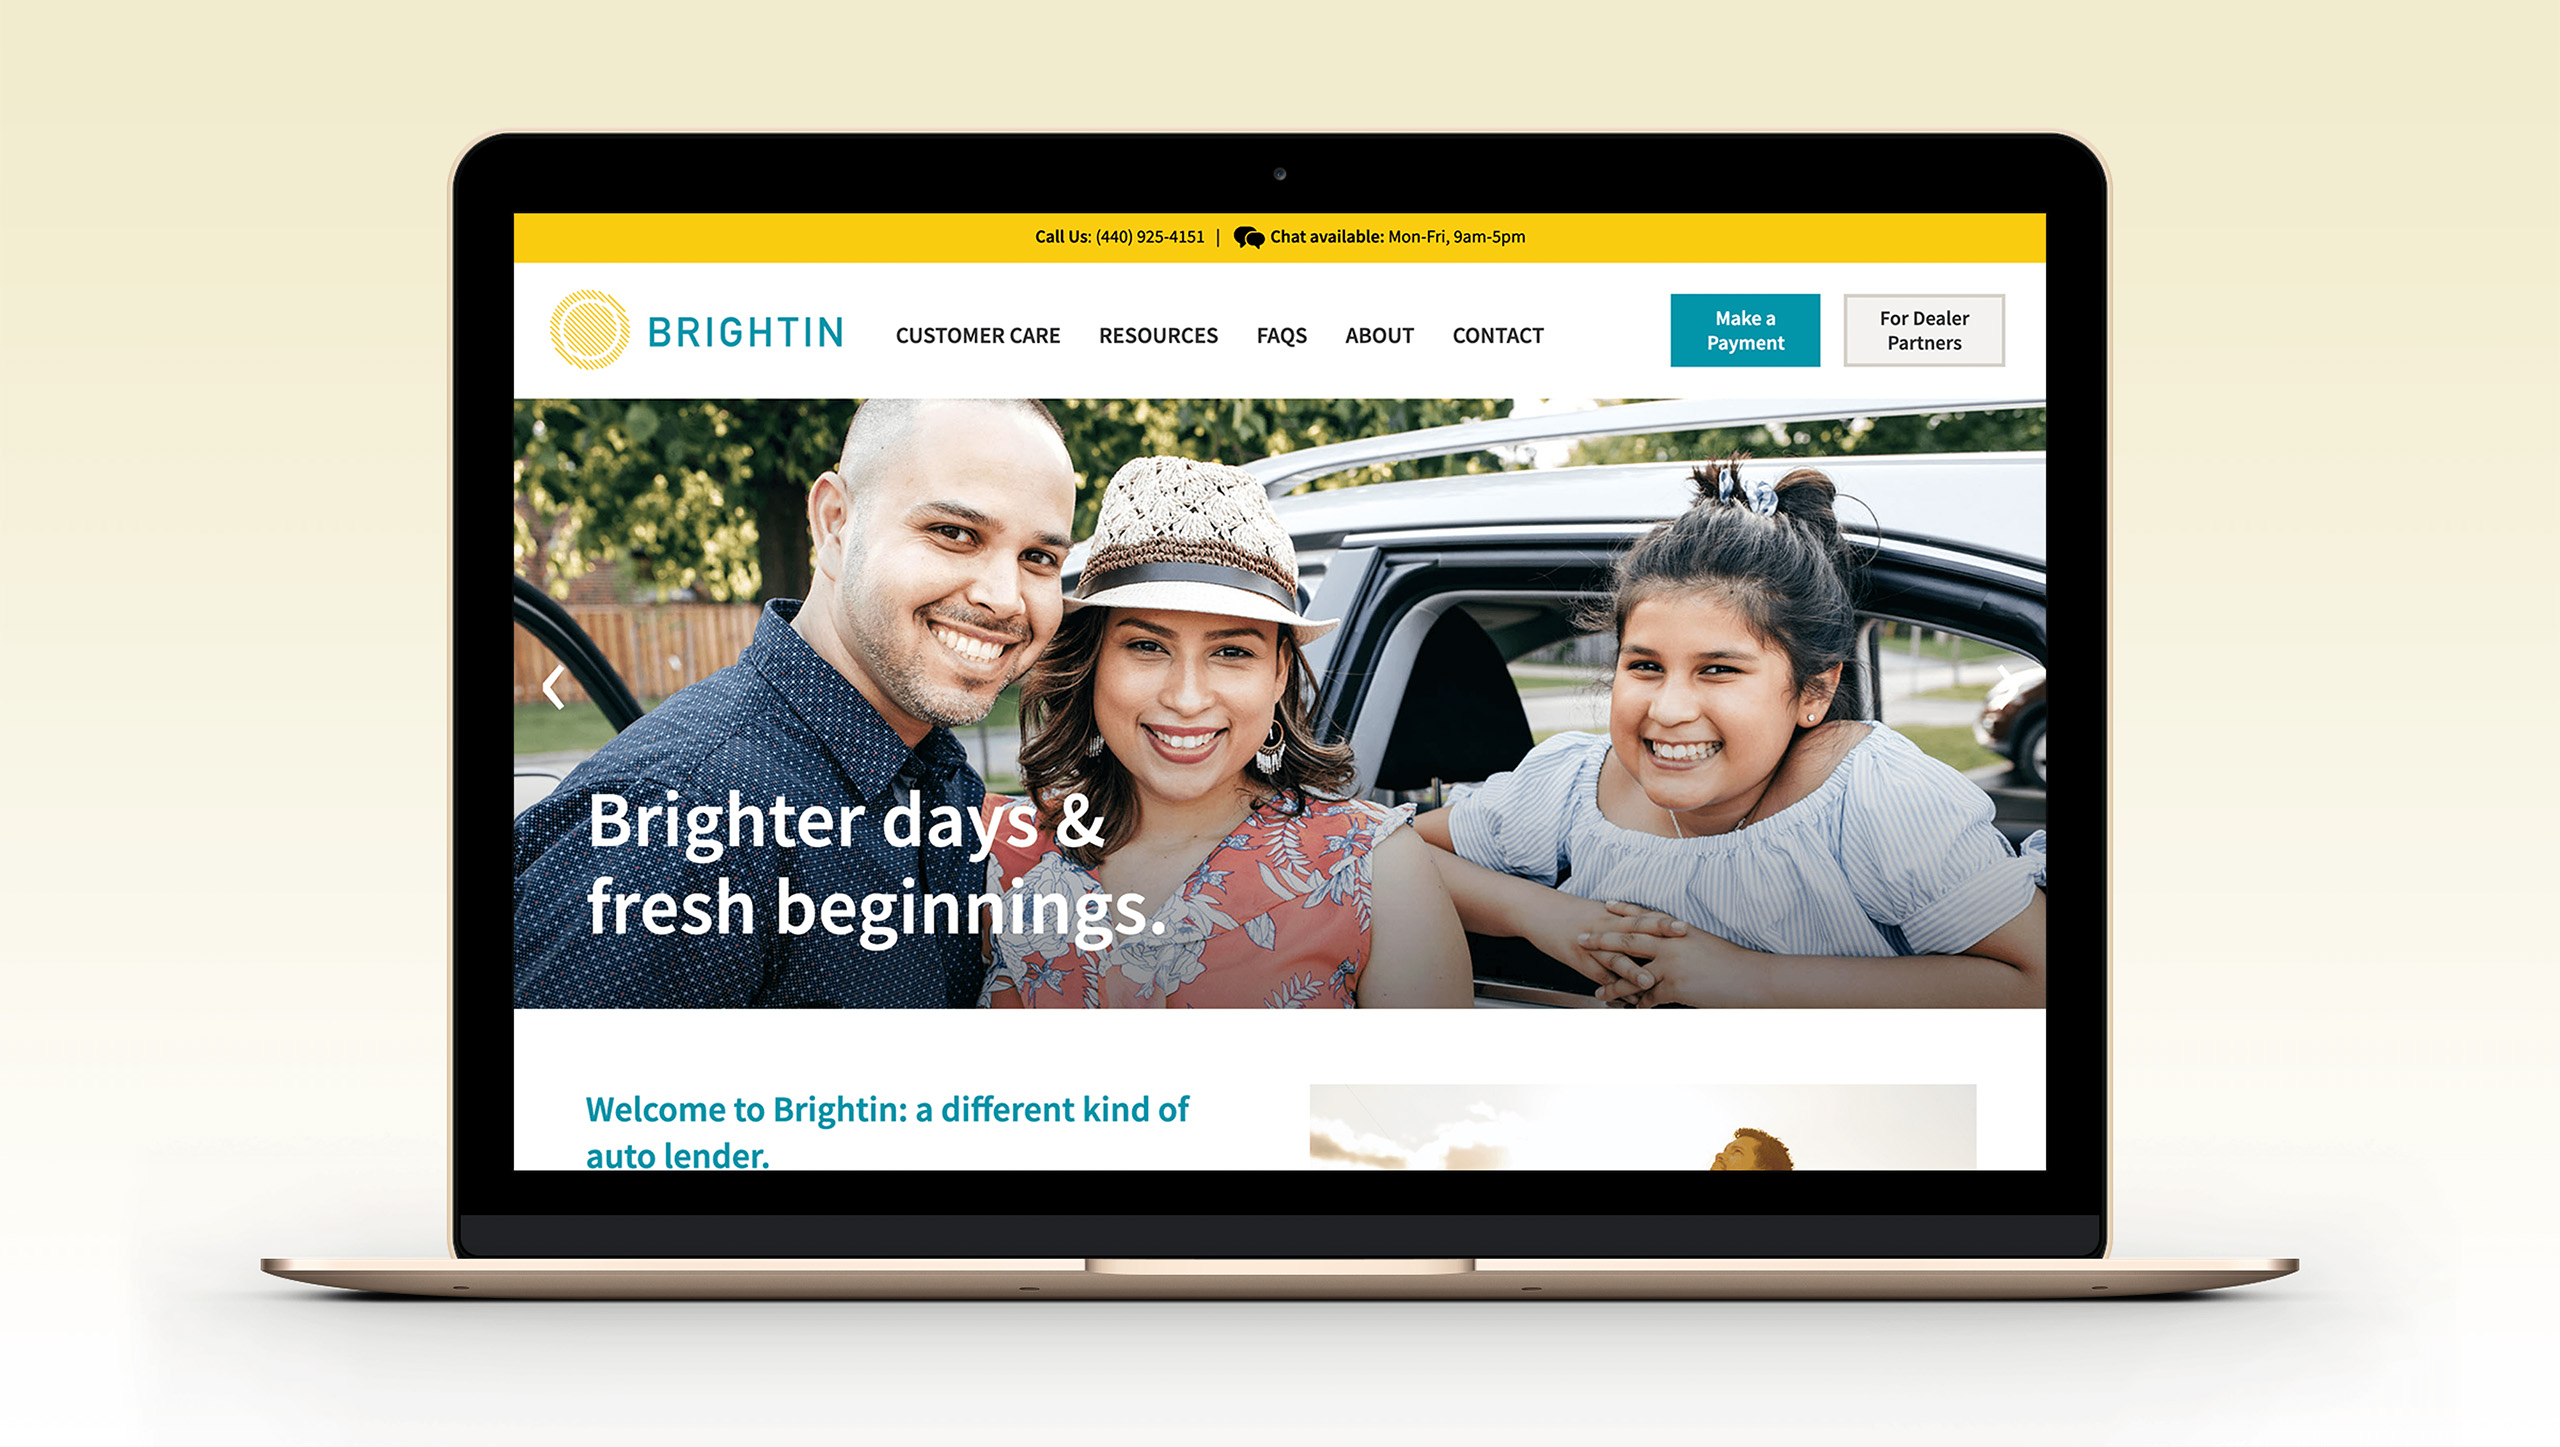 Brightin website homepage shown on laptop